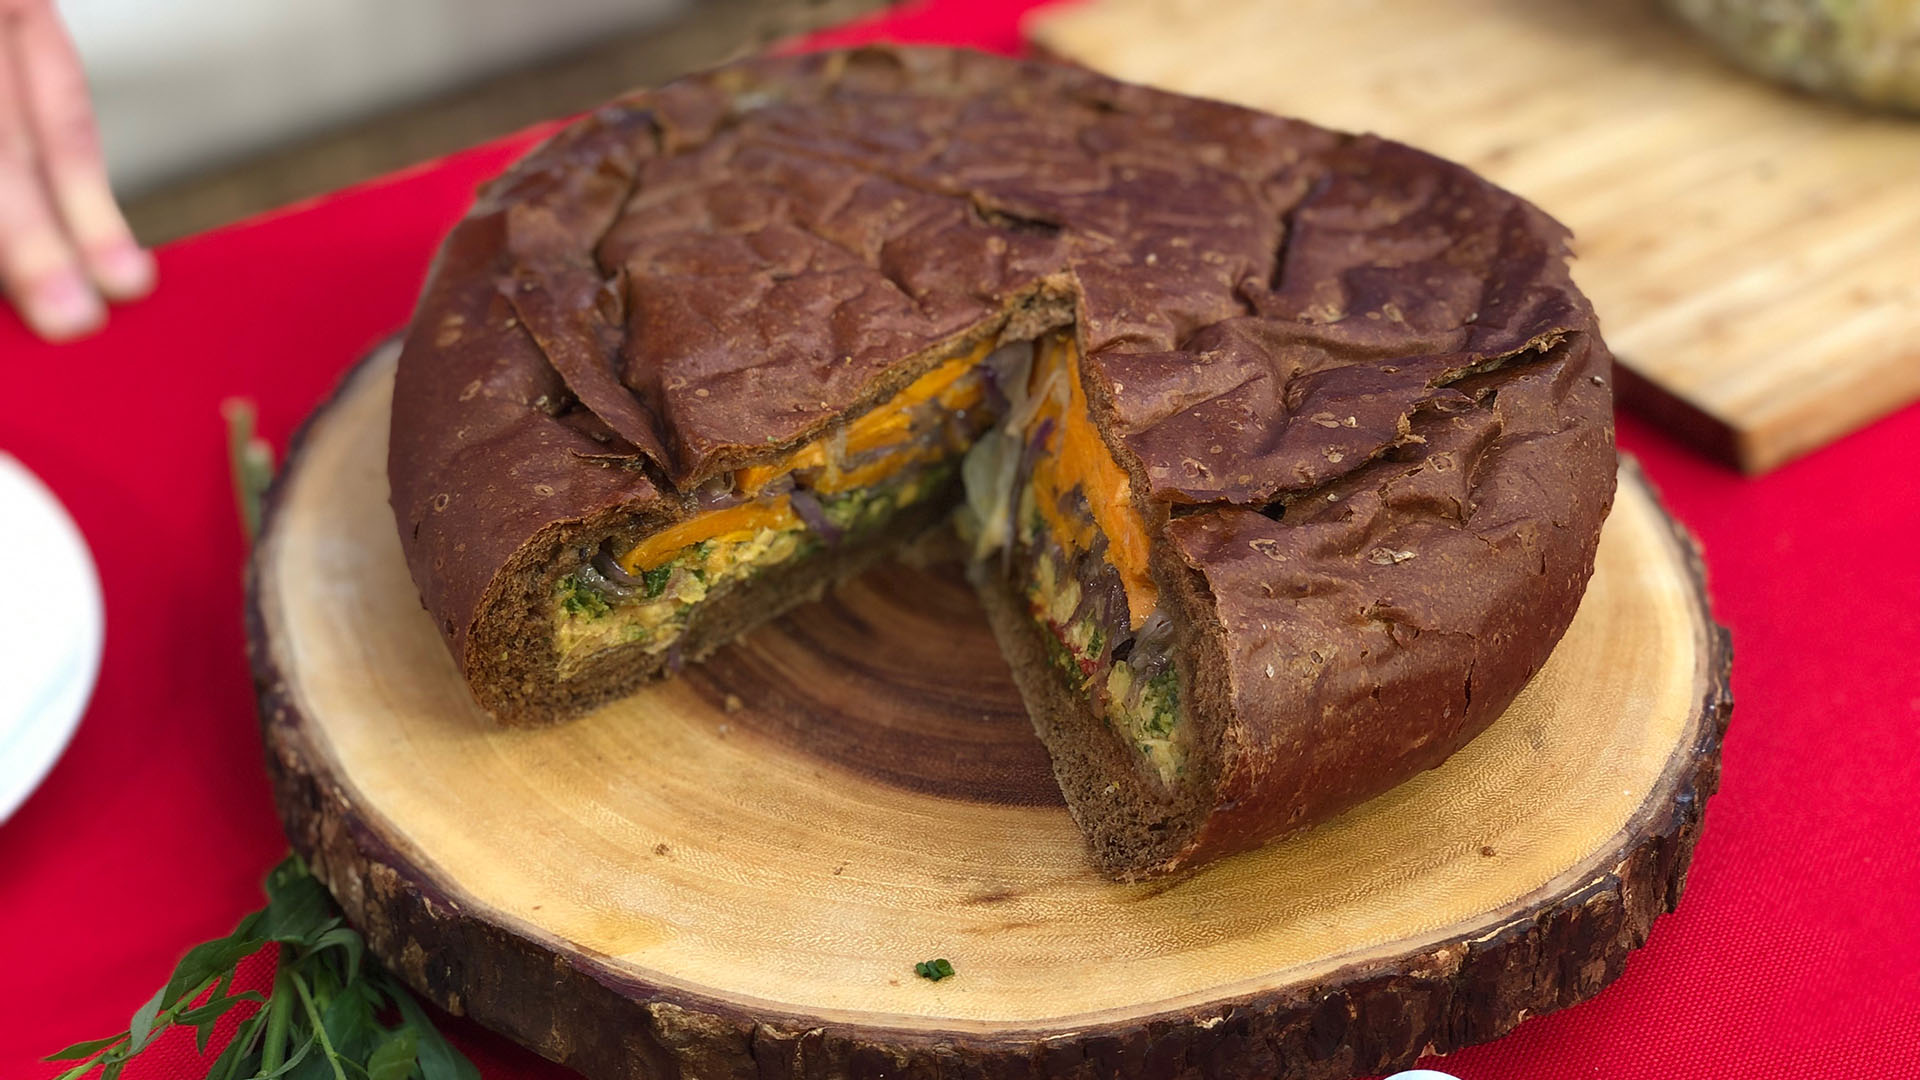 Epic vegetarian picnic sandwich with arugula pesto